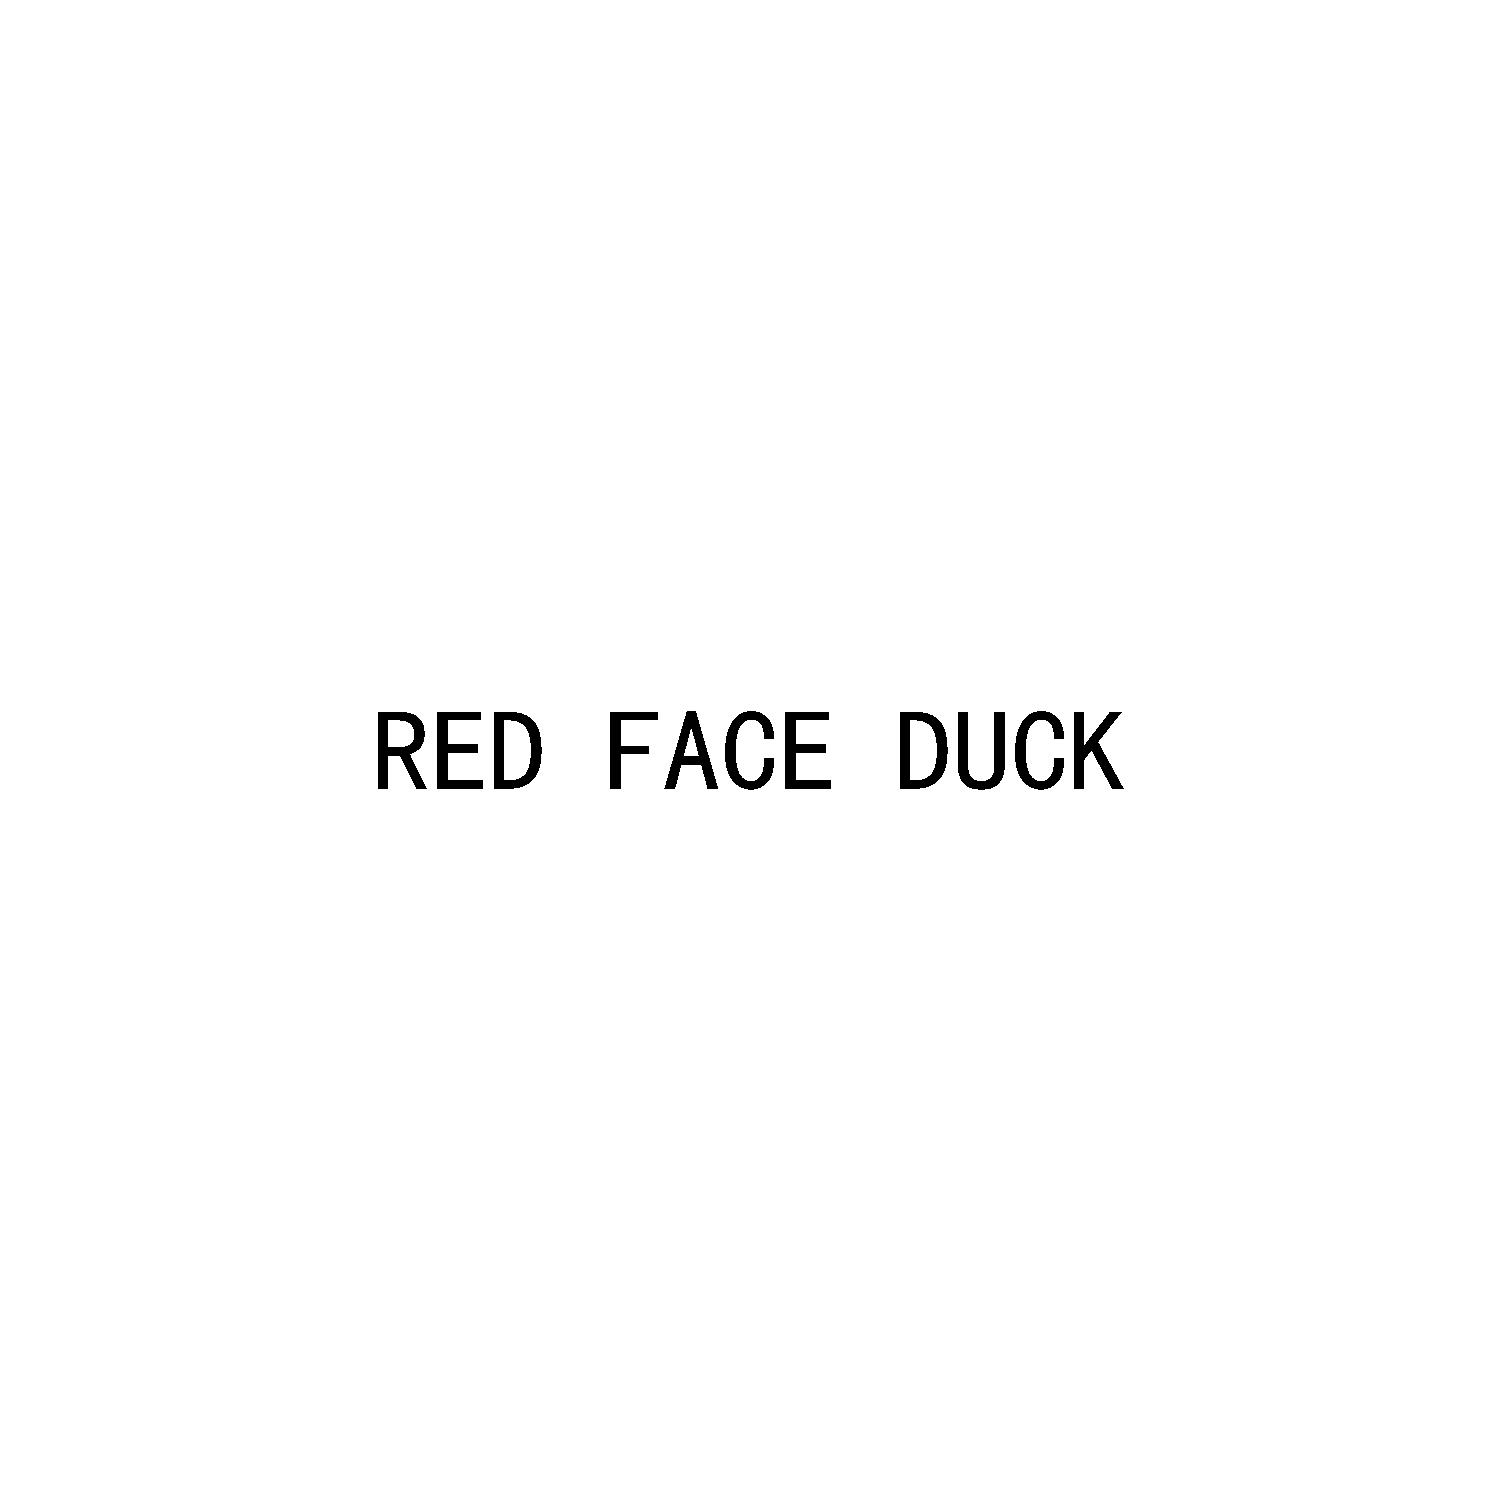 Red Fece Duck